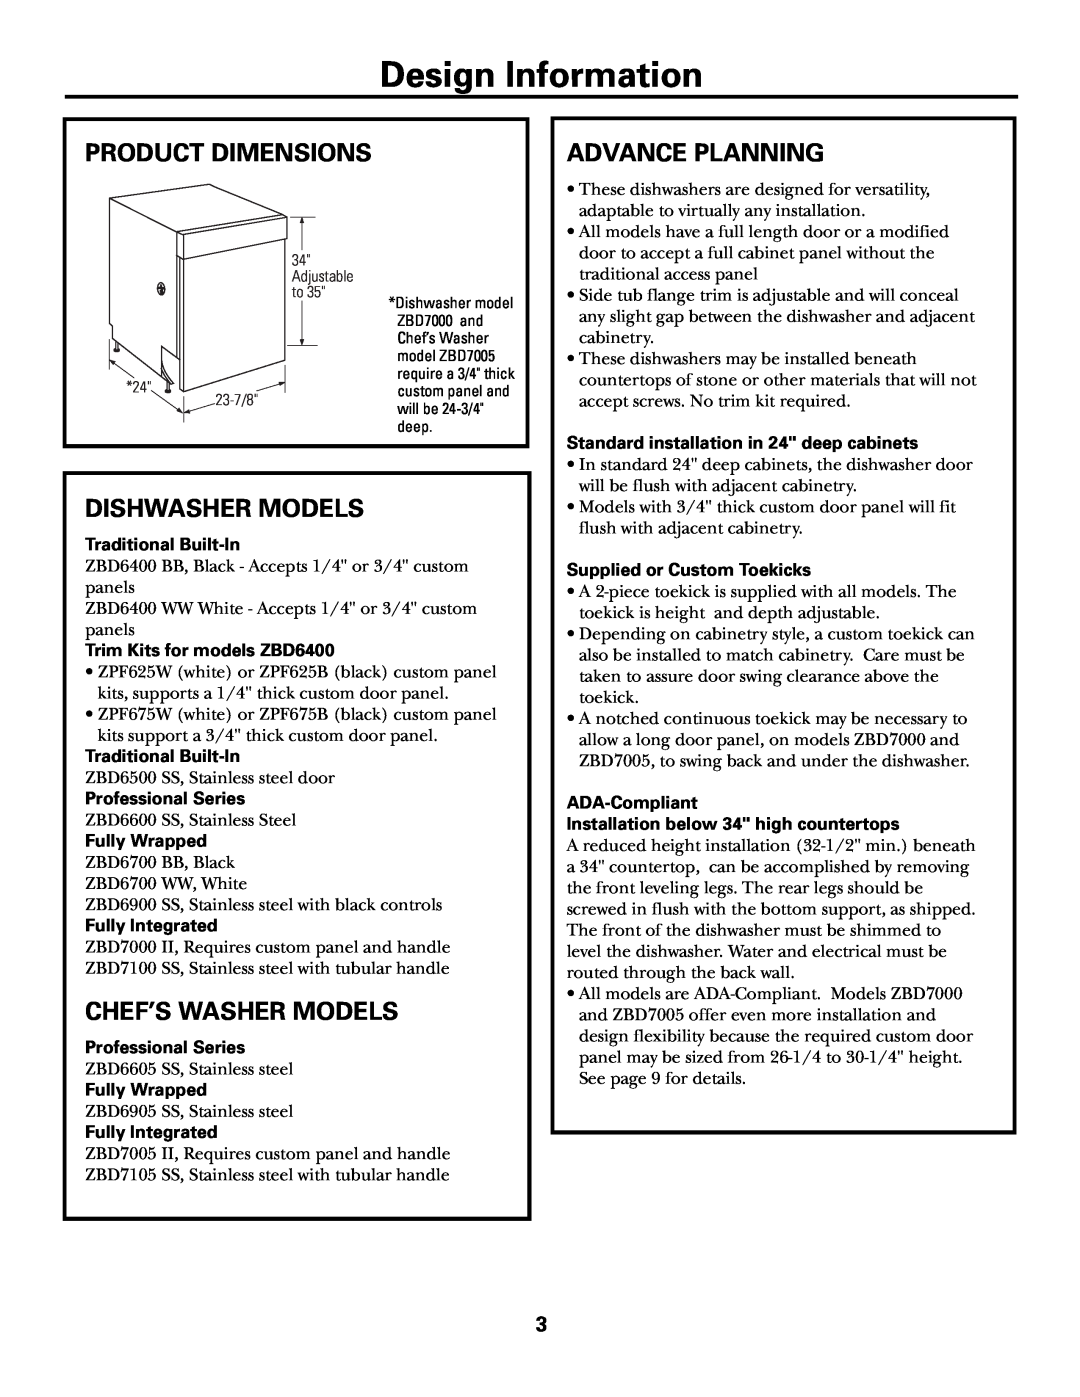 GE Monogram ZBD6700 Design Information, Product Dimensions, Dishwasher Models, Chef’S Washer Models, Advance Planning 